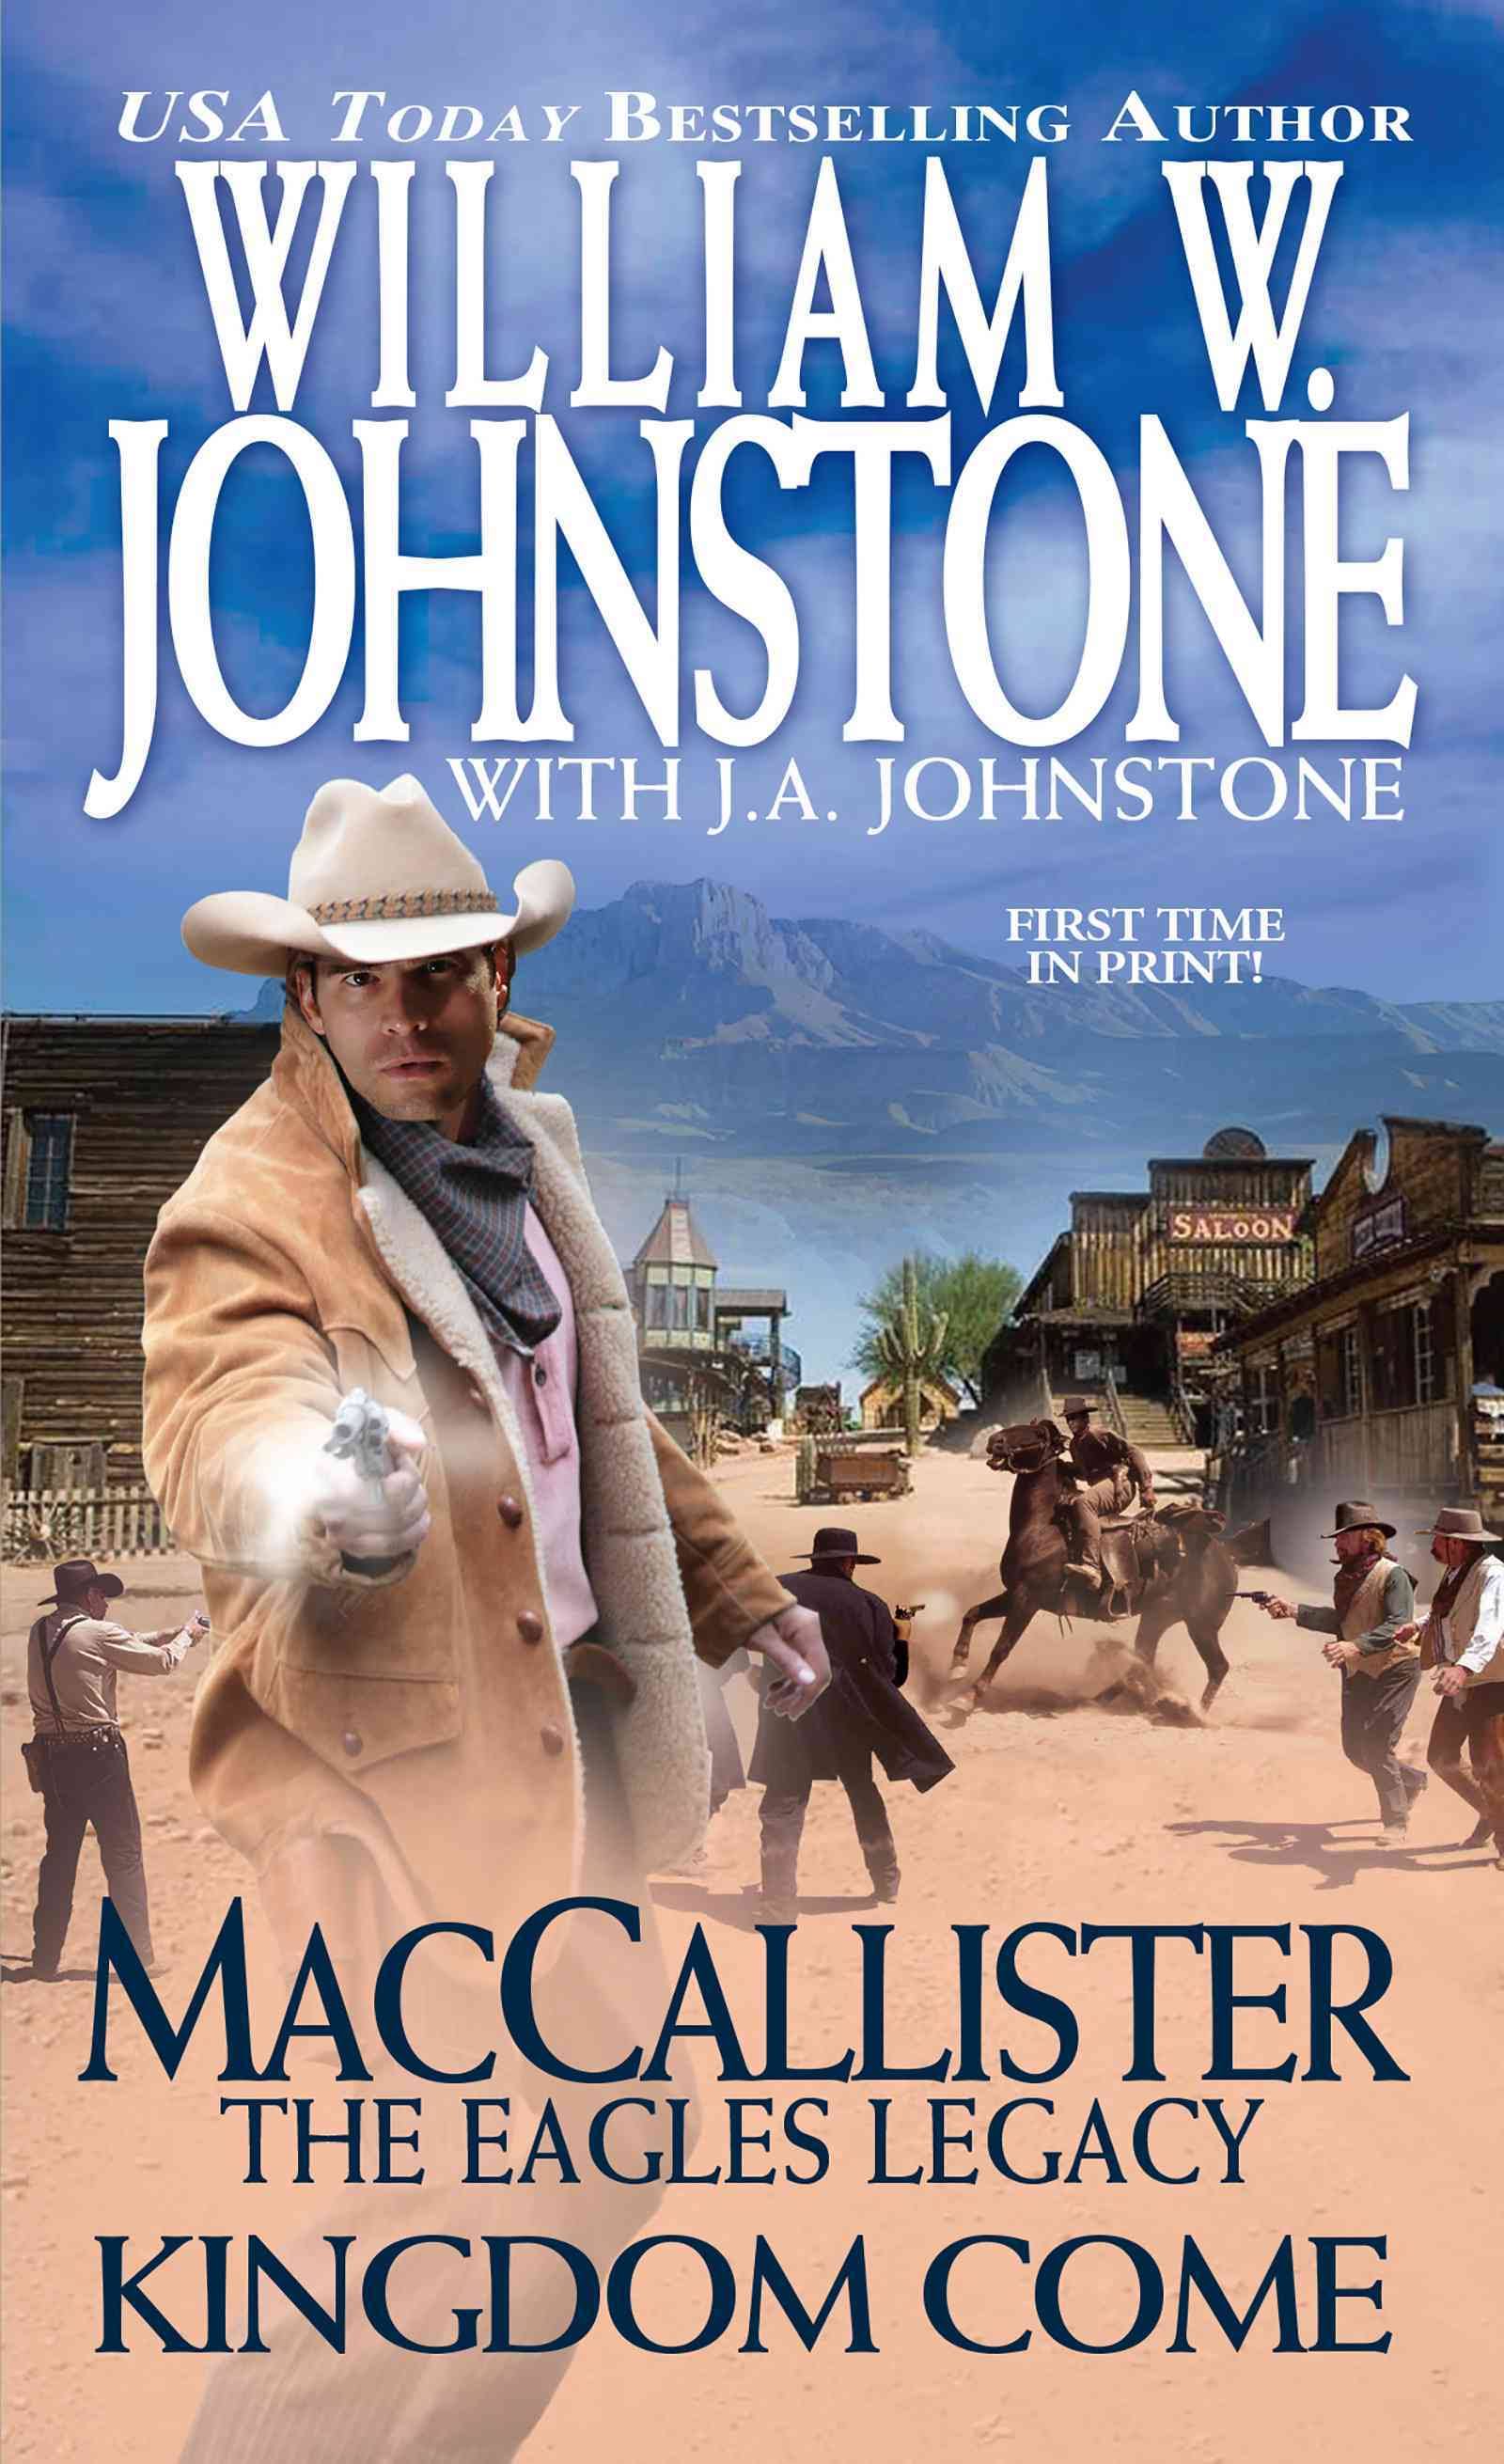 MacCallister Kingdom Come: The Eagles Legacy - William W. Johnstone and J.A. Johnstone